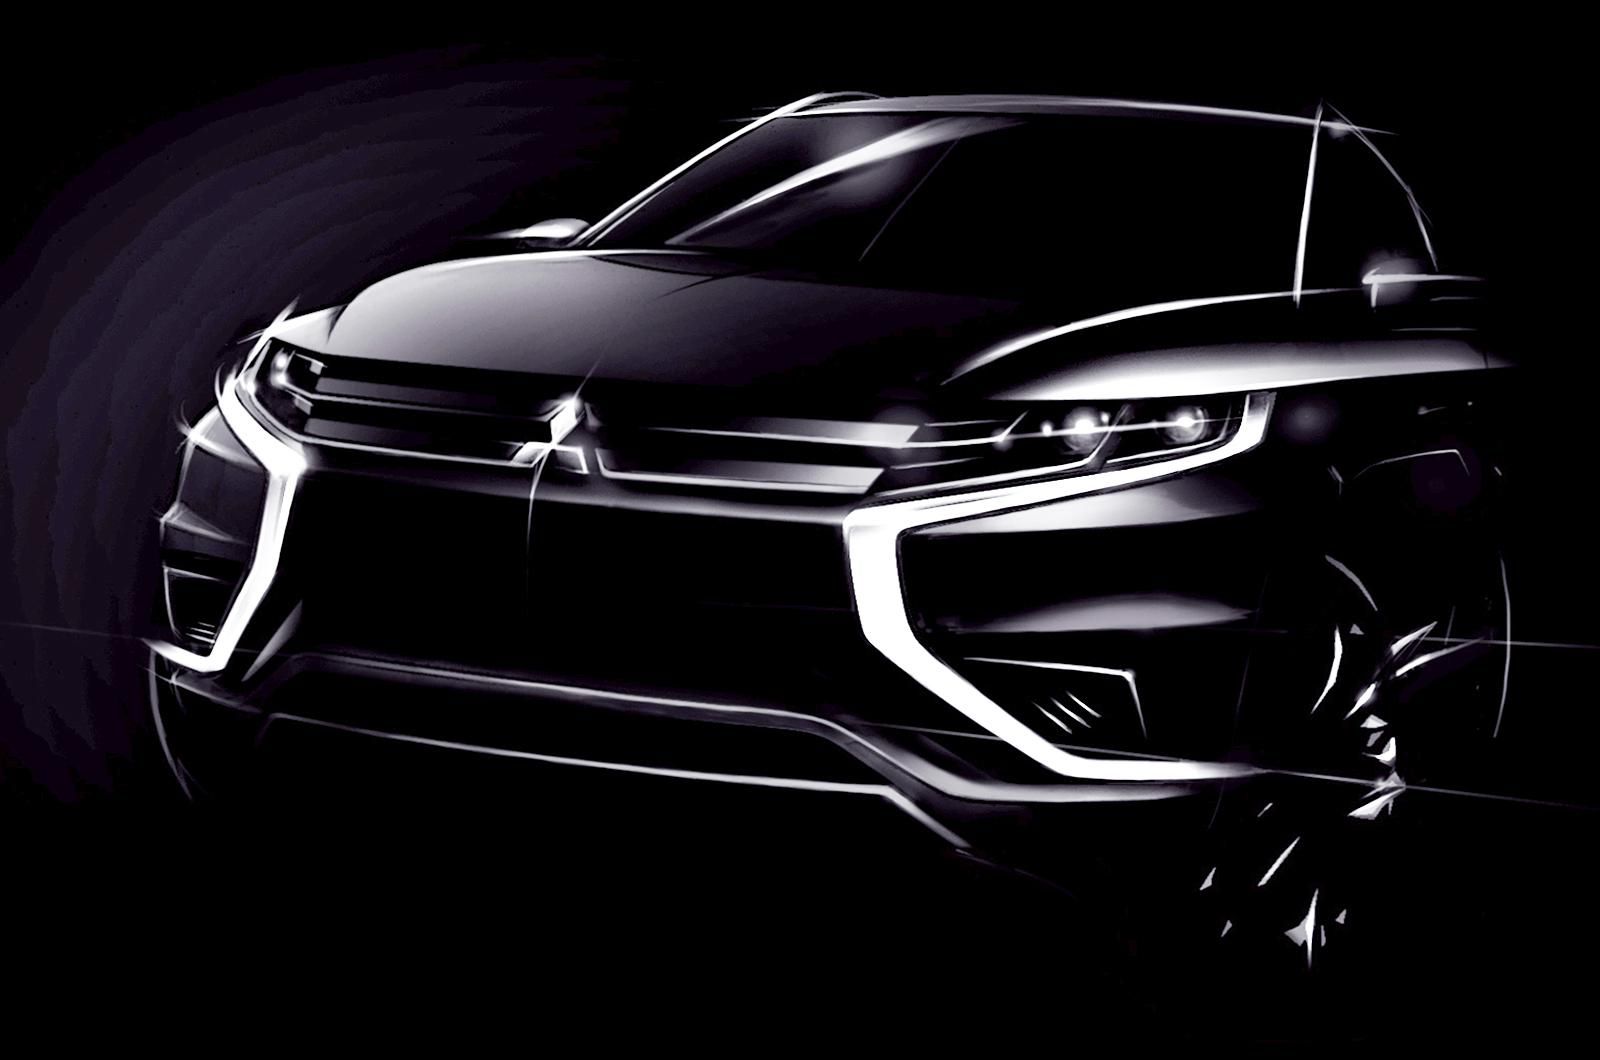 2015 Mitsubishi Outlander PHEV Concept-S